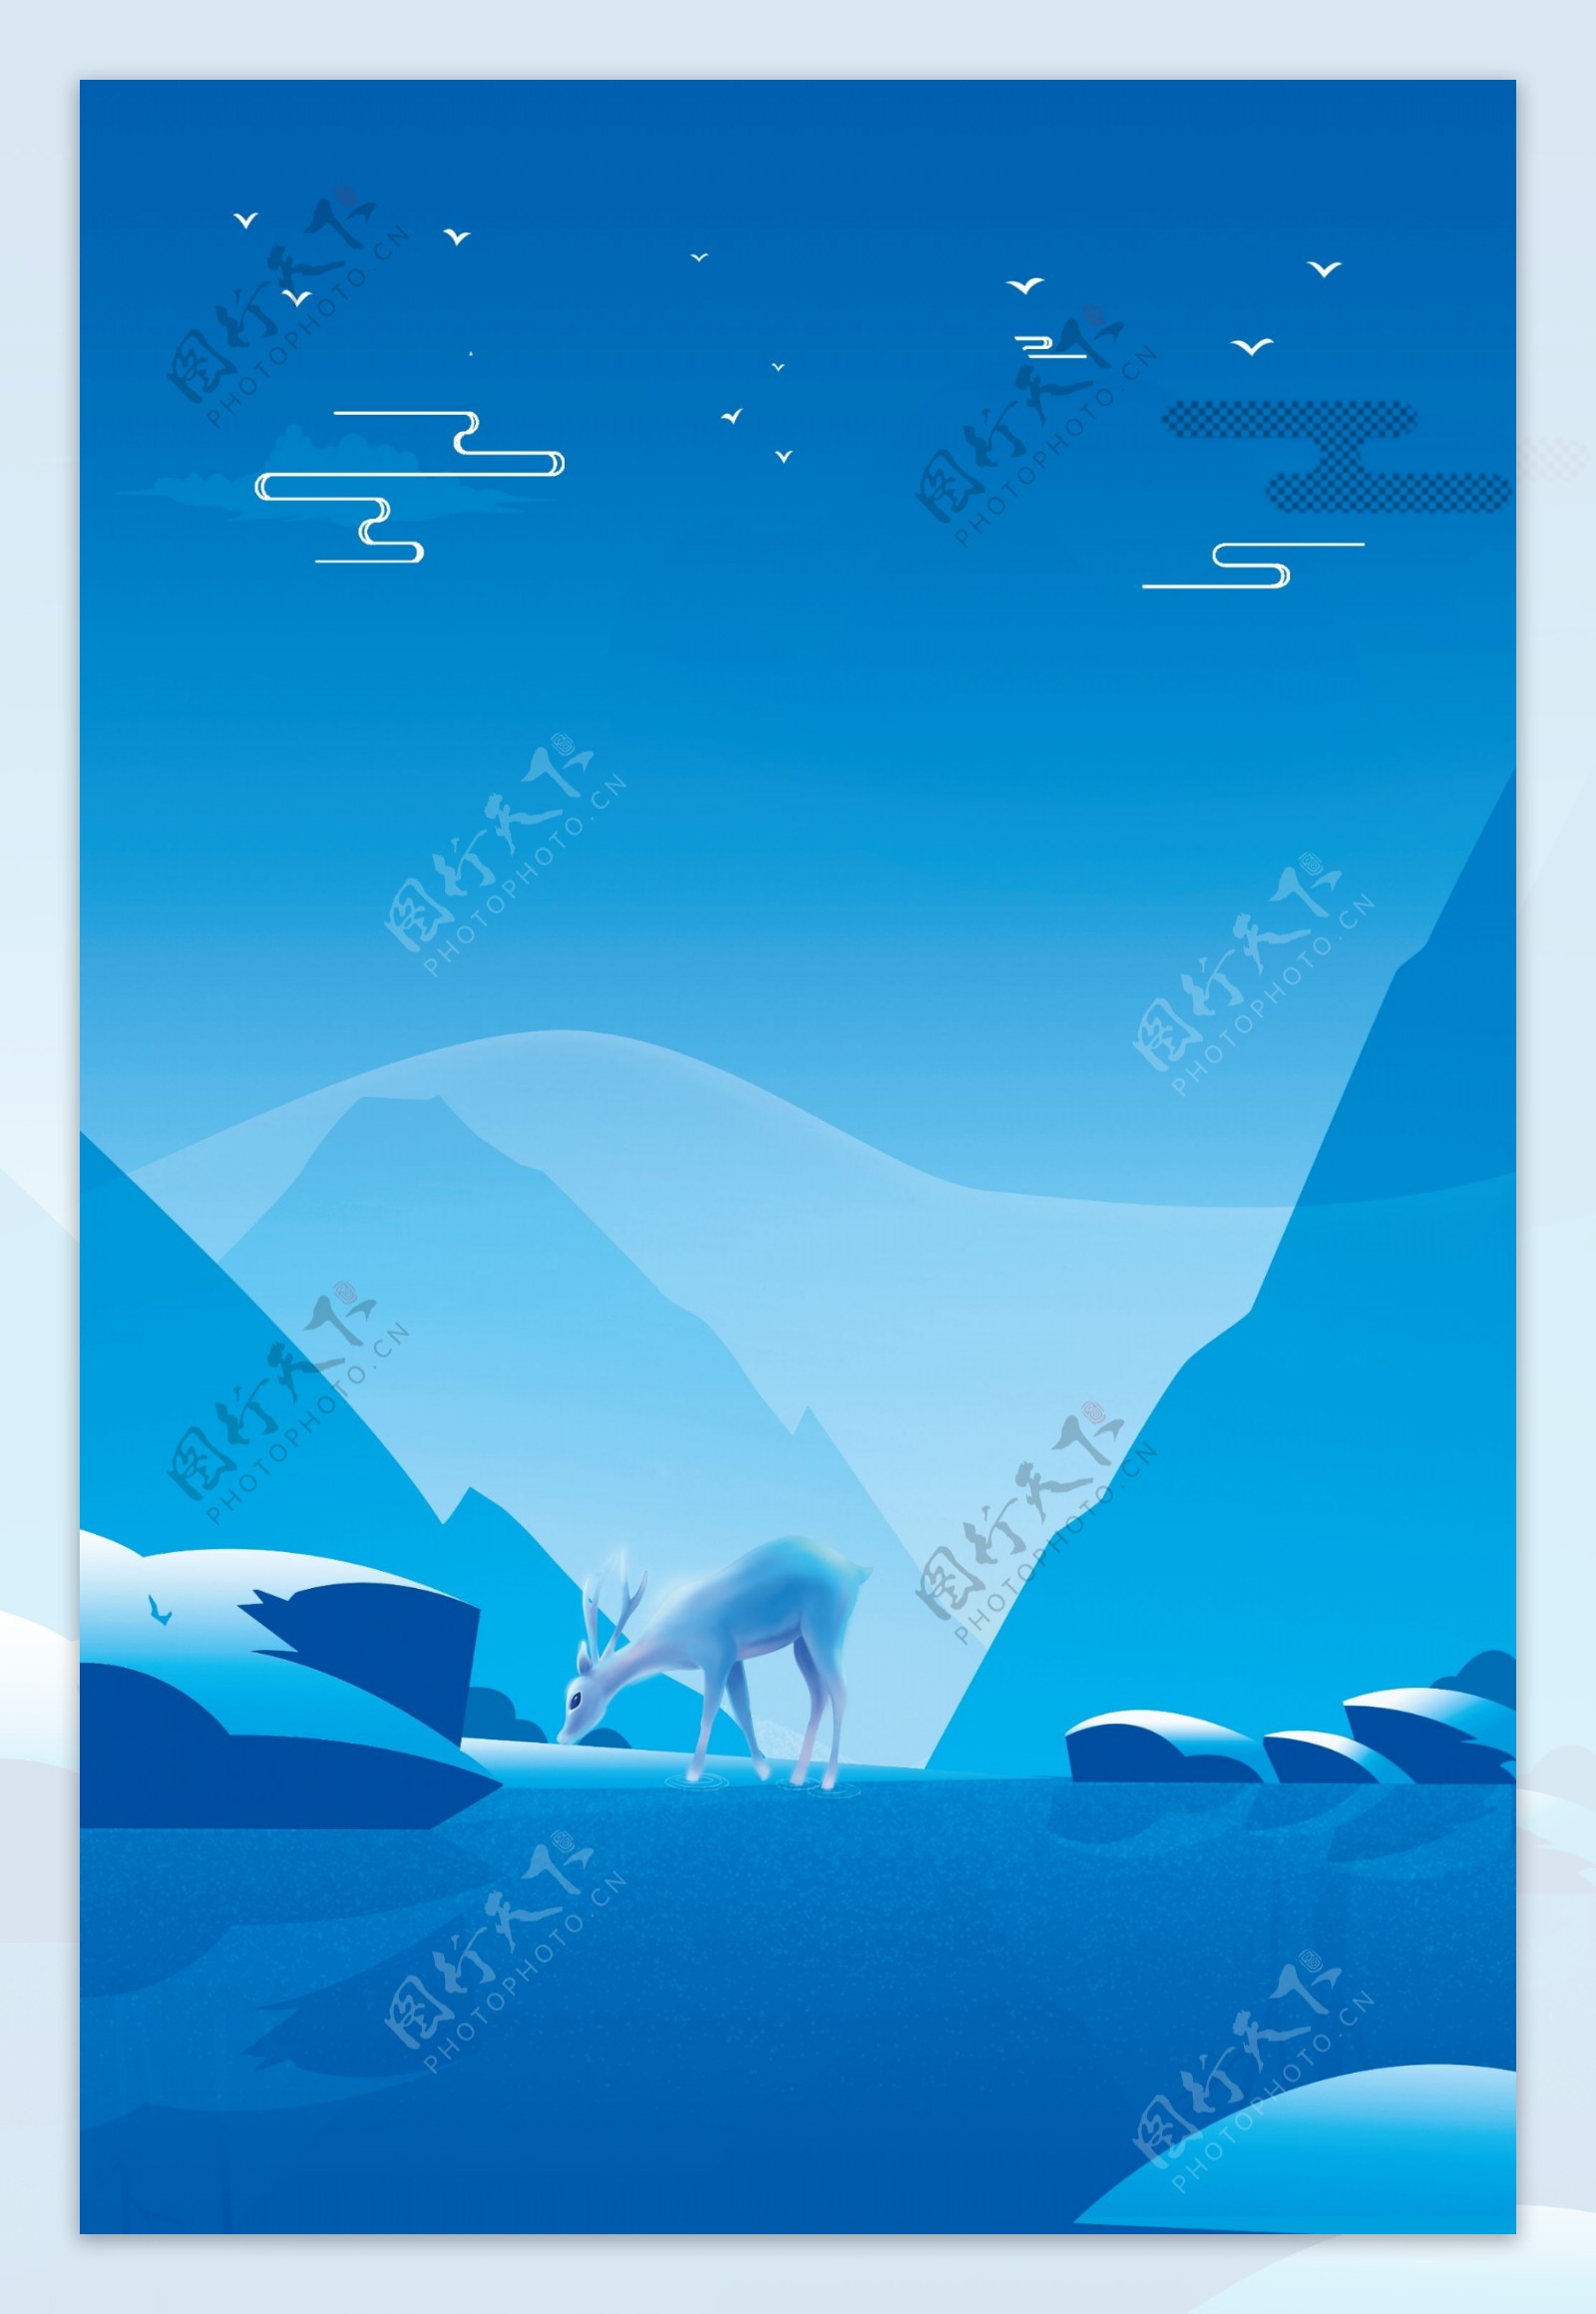 蓝色雪山雪地海报背景